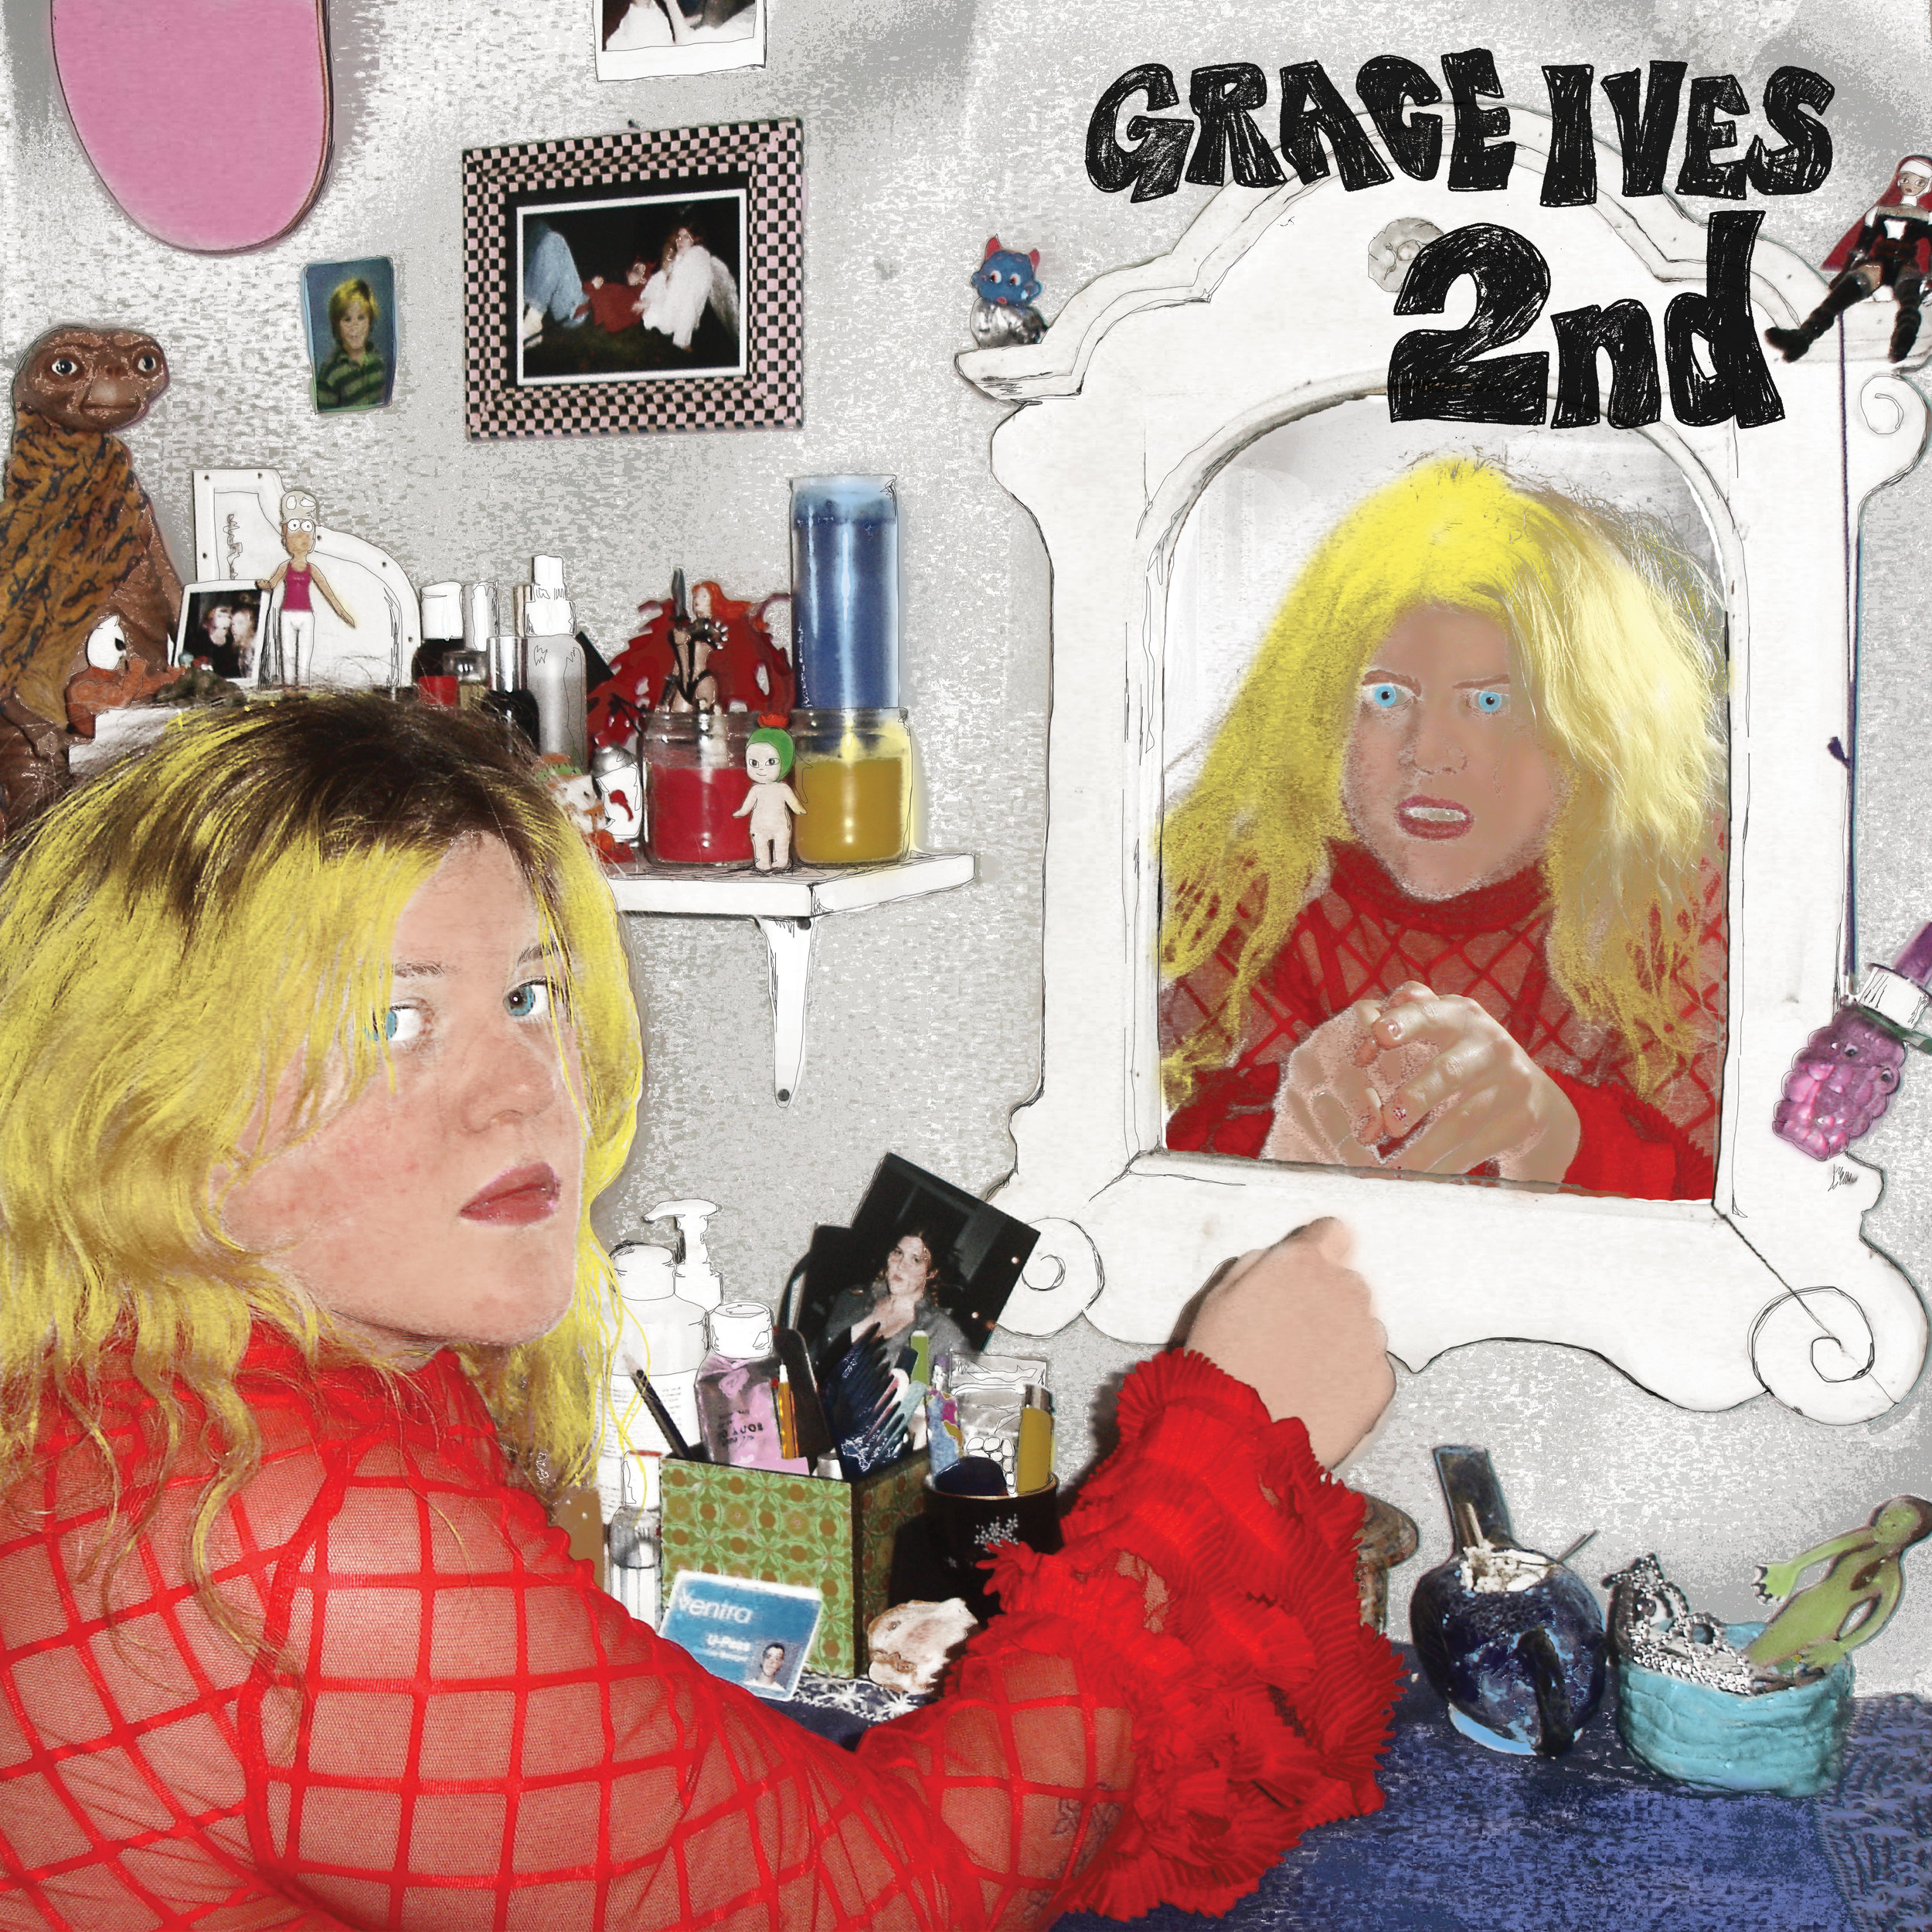 Grace Ives 2nd cover artwork